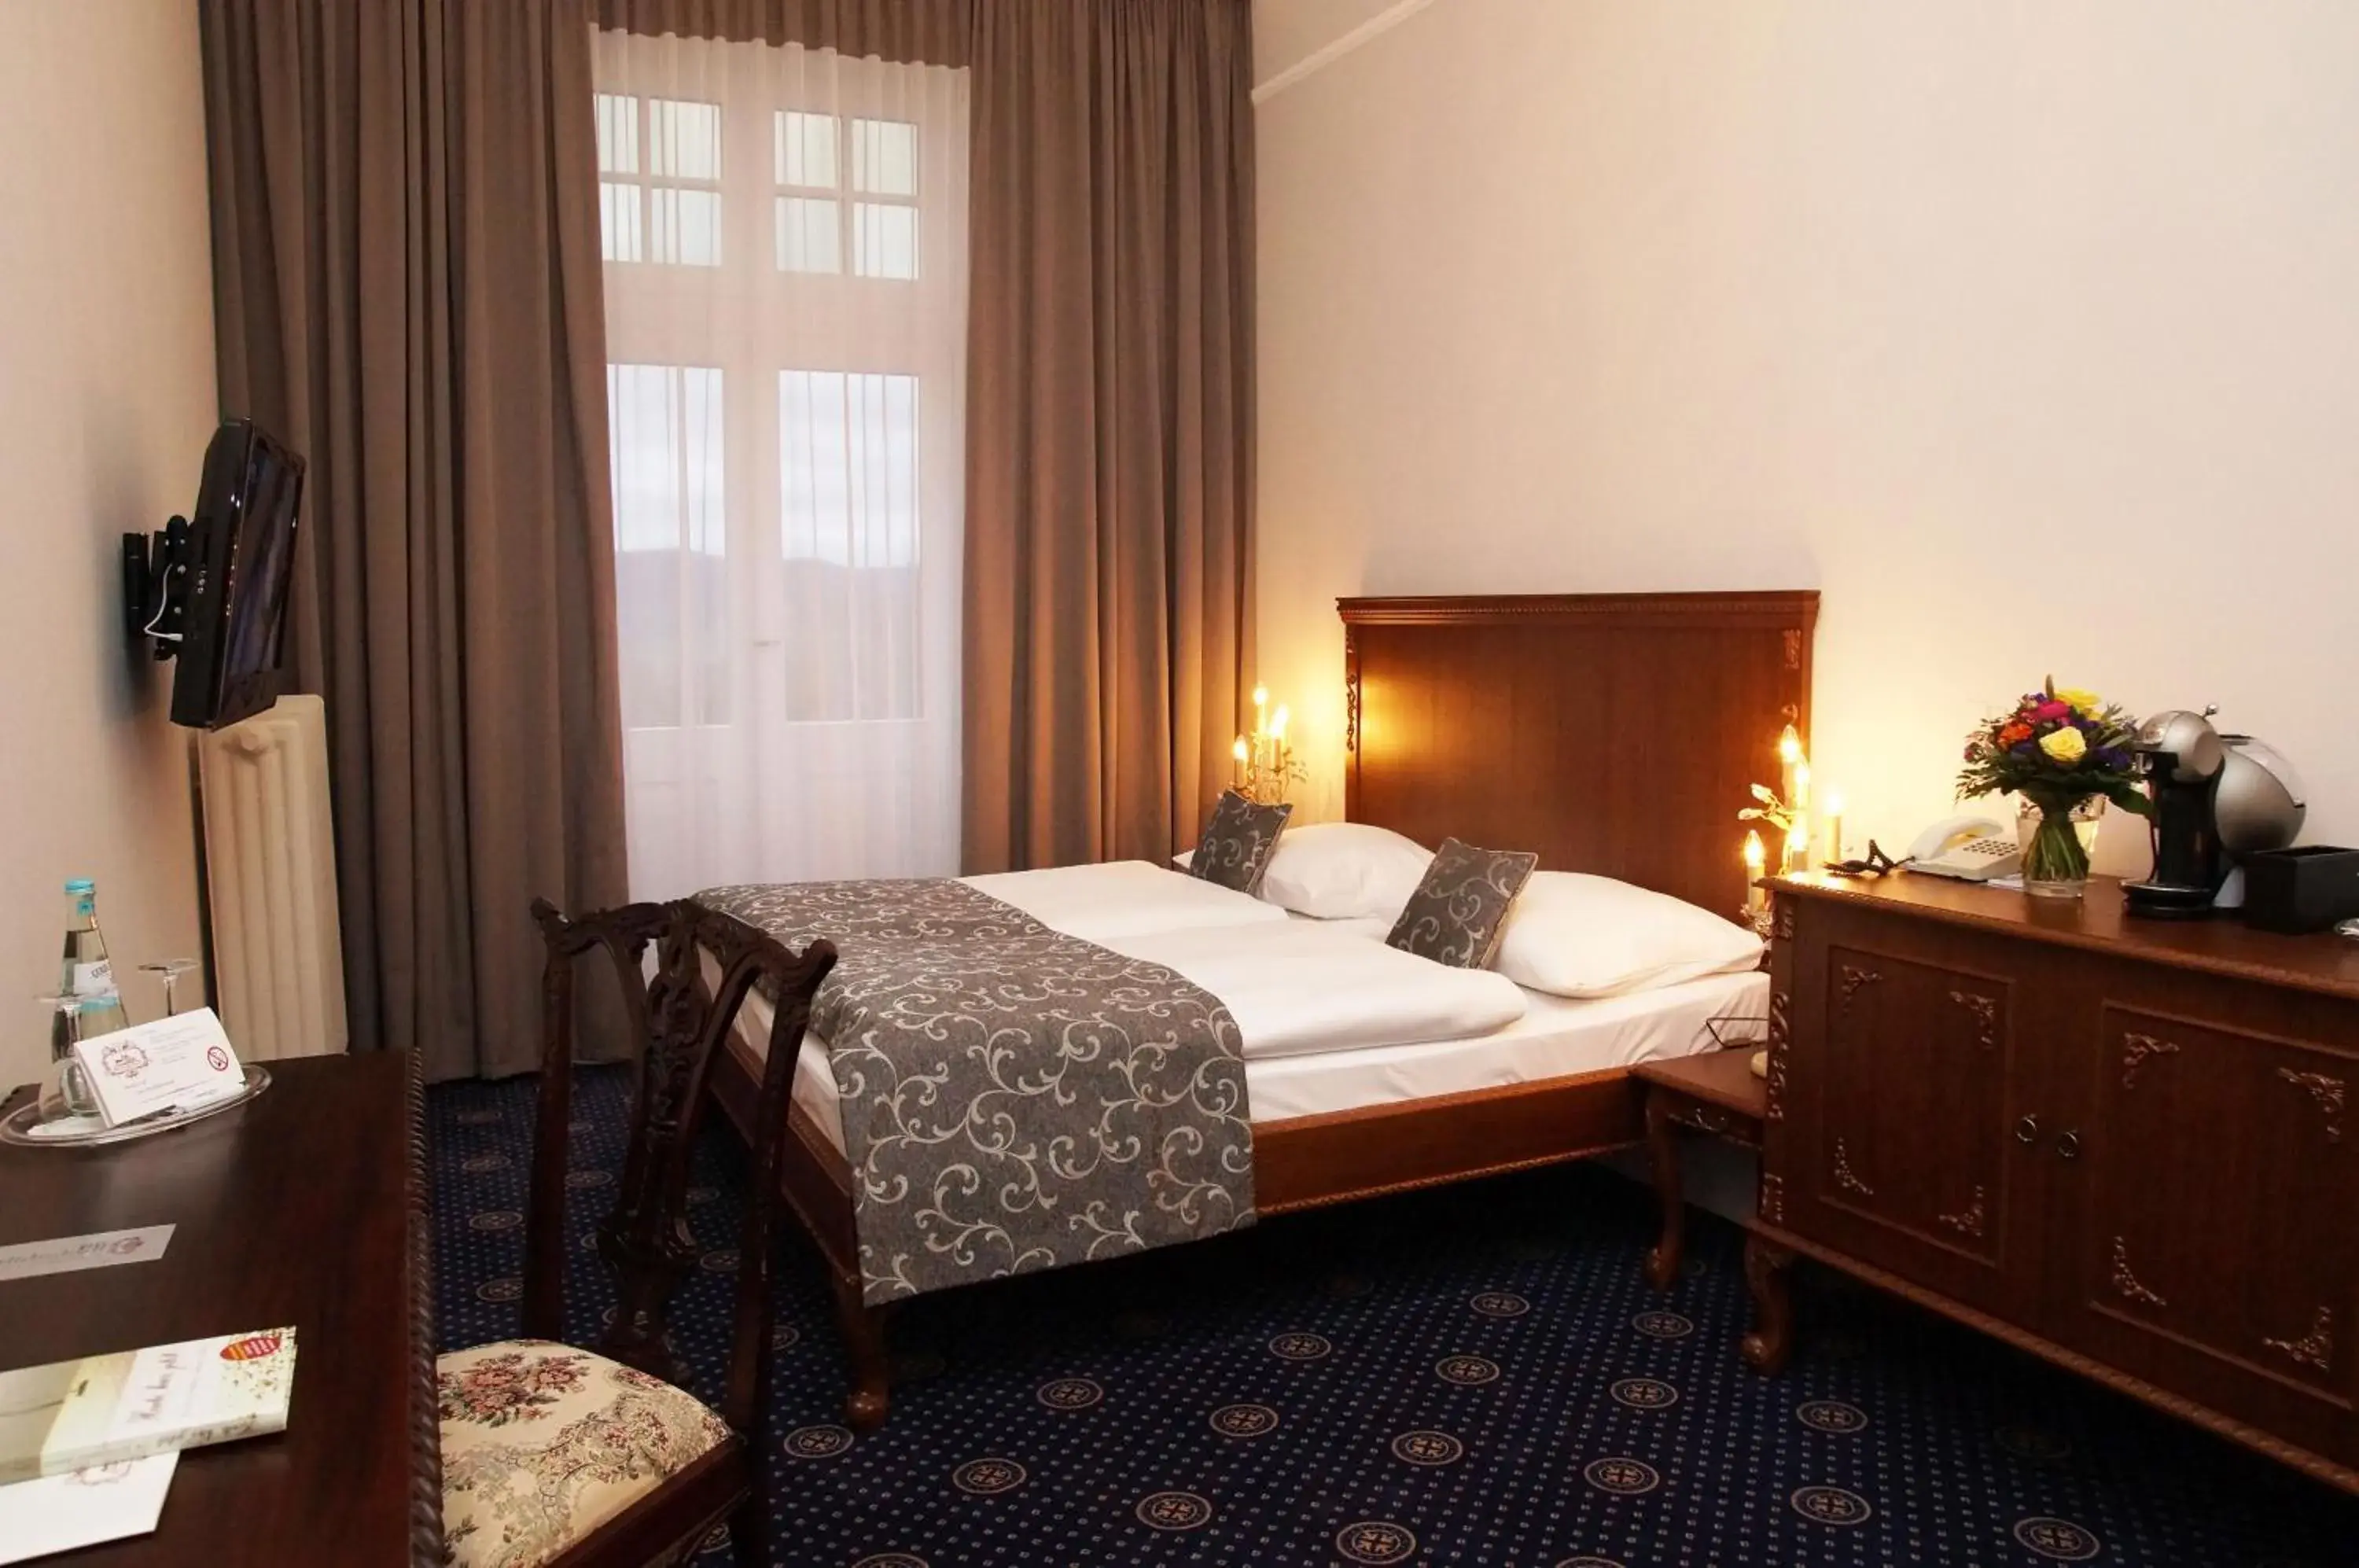 Bed, Room Photo in Schloss Hotel Wolfsbrunnen